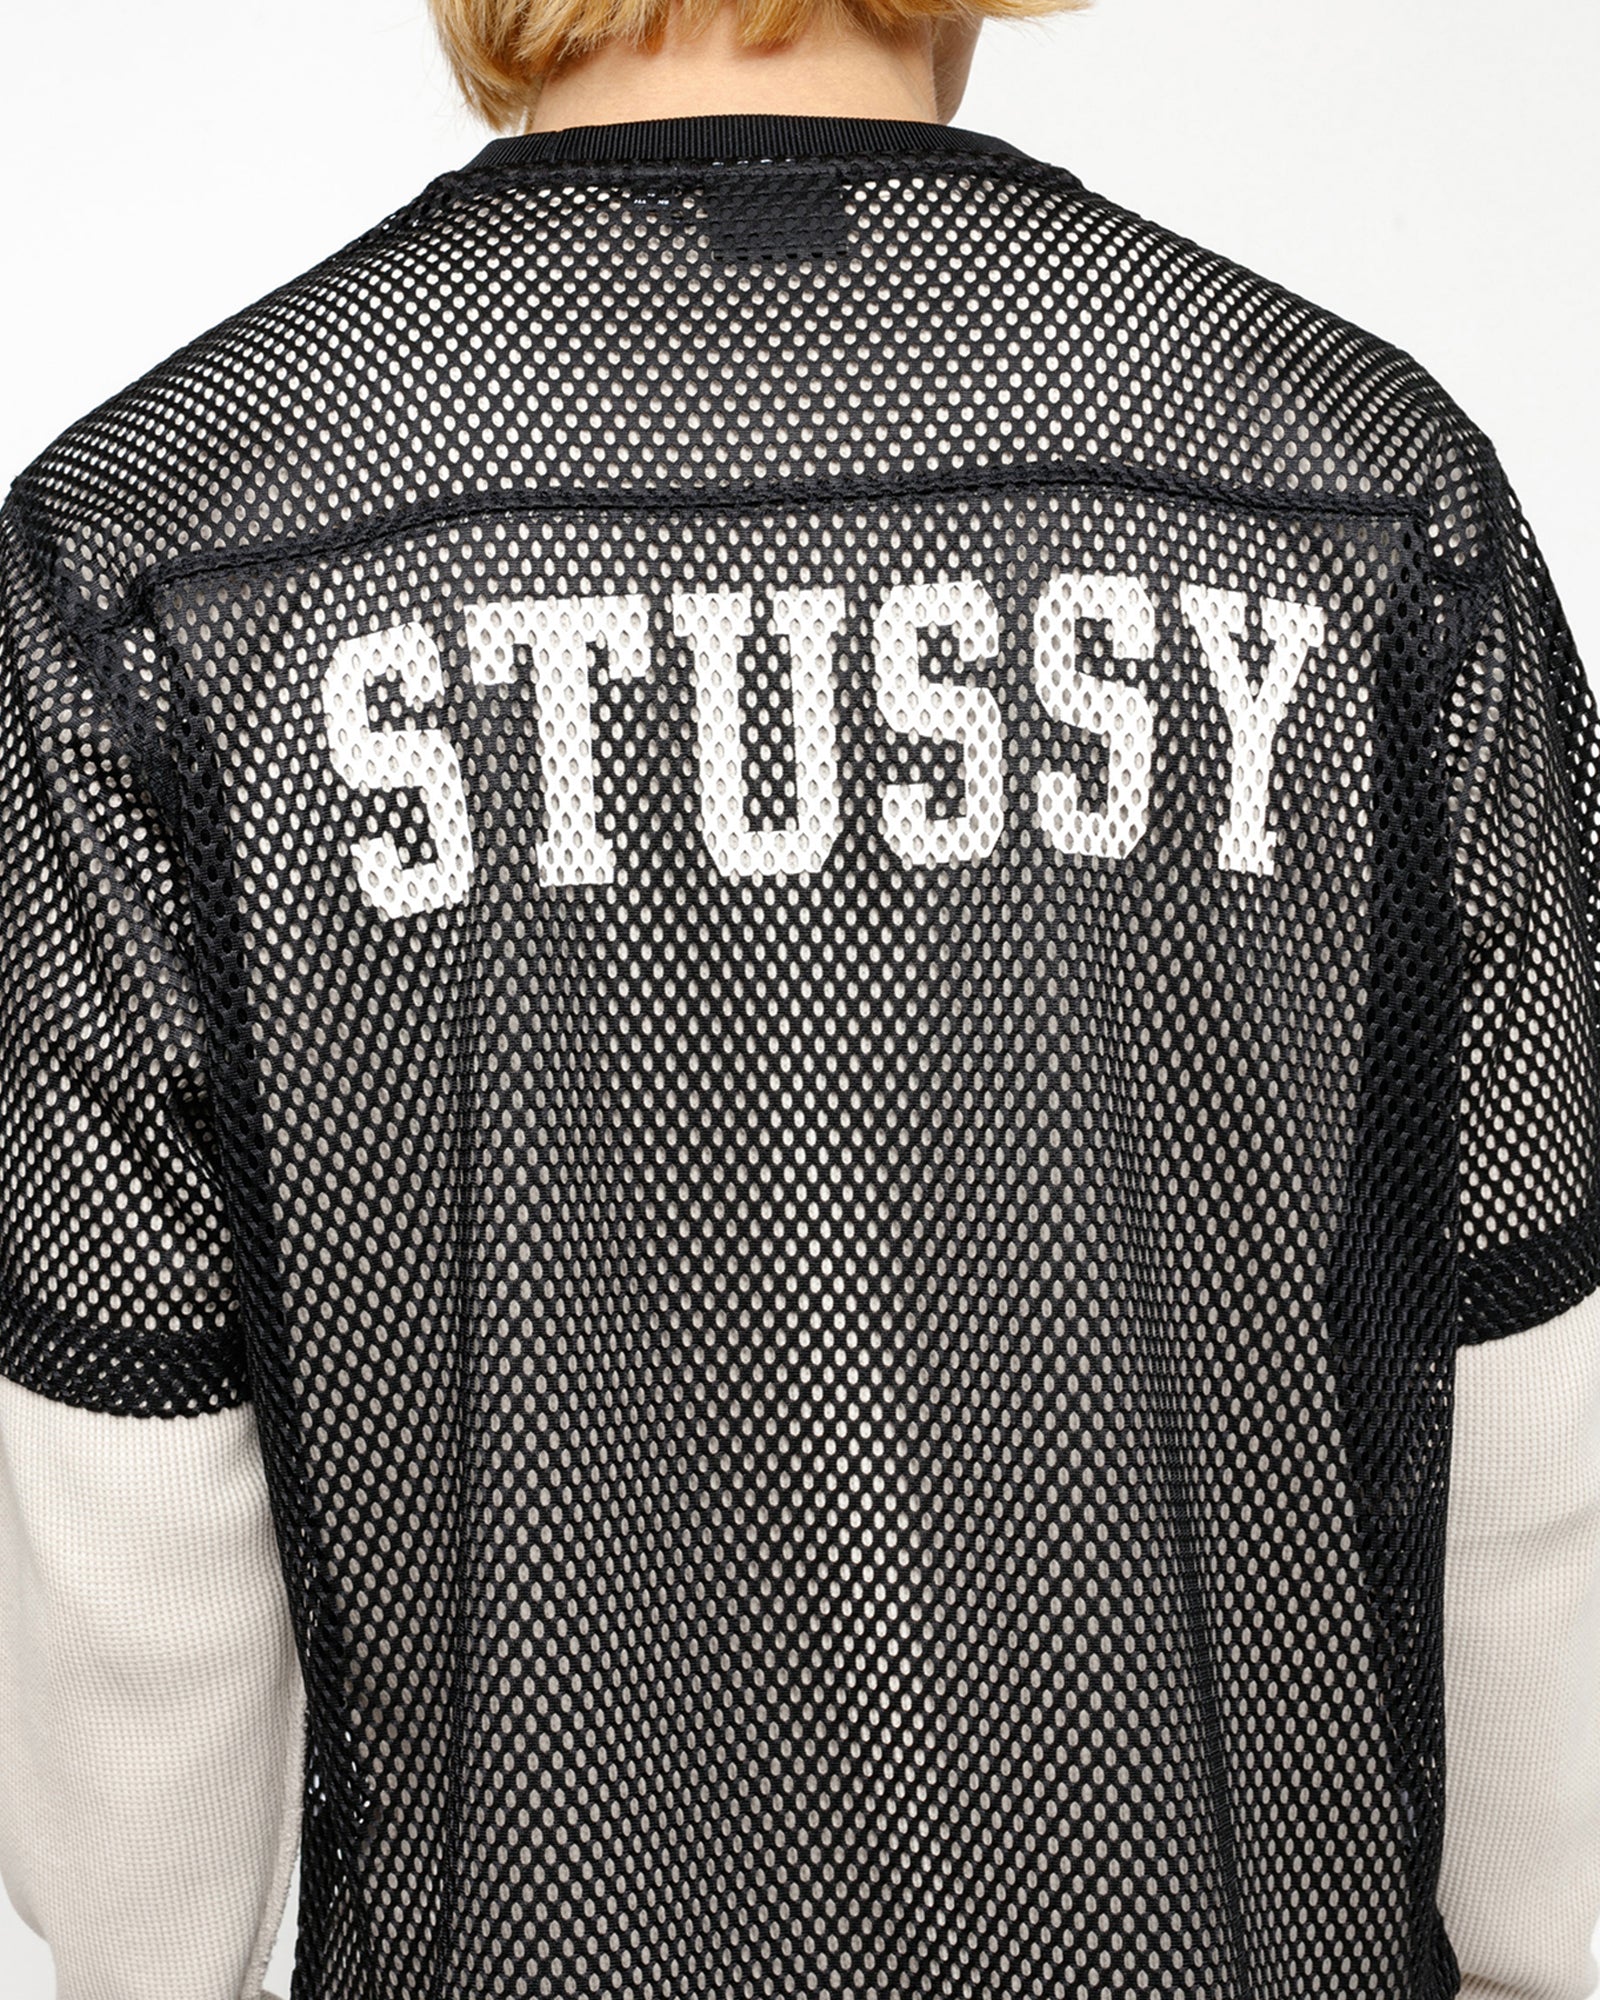 Stüssy Team Jersey 80 Black Top